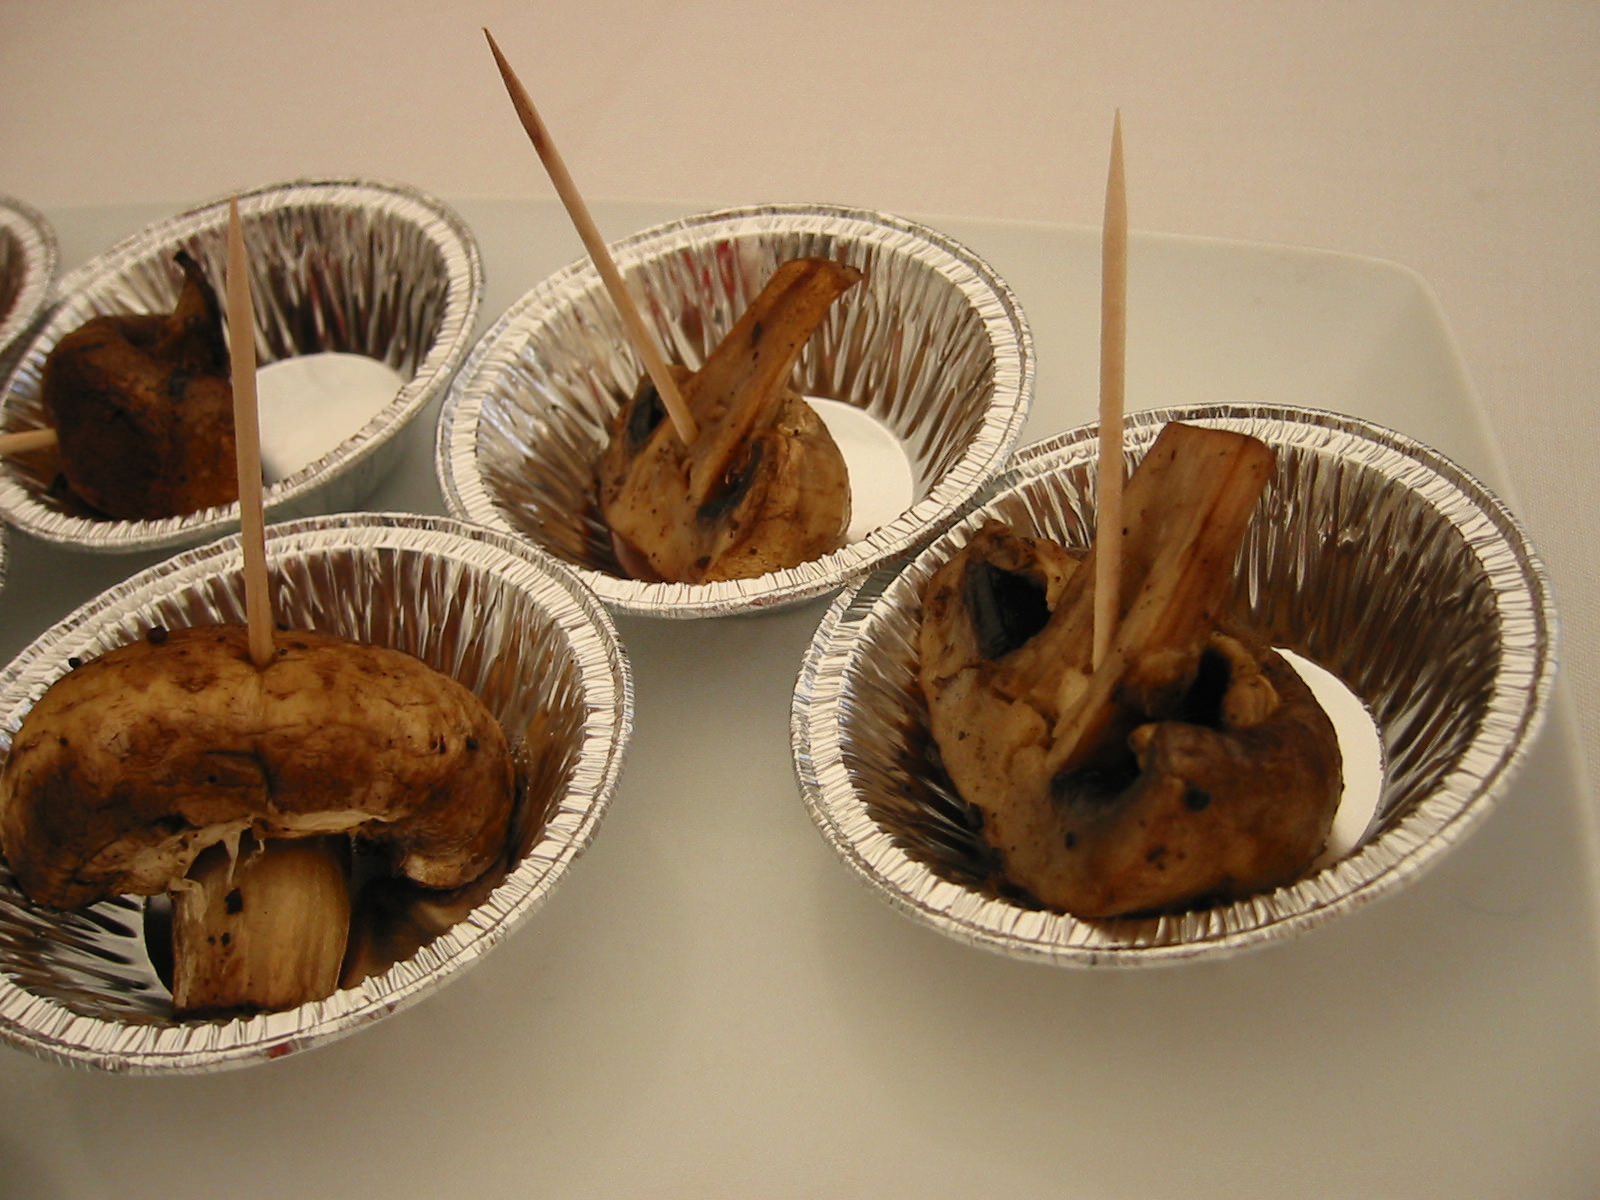 Barbecued mushroom samples